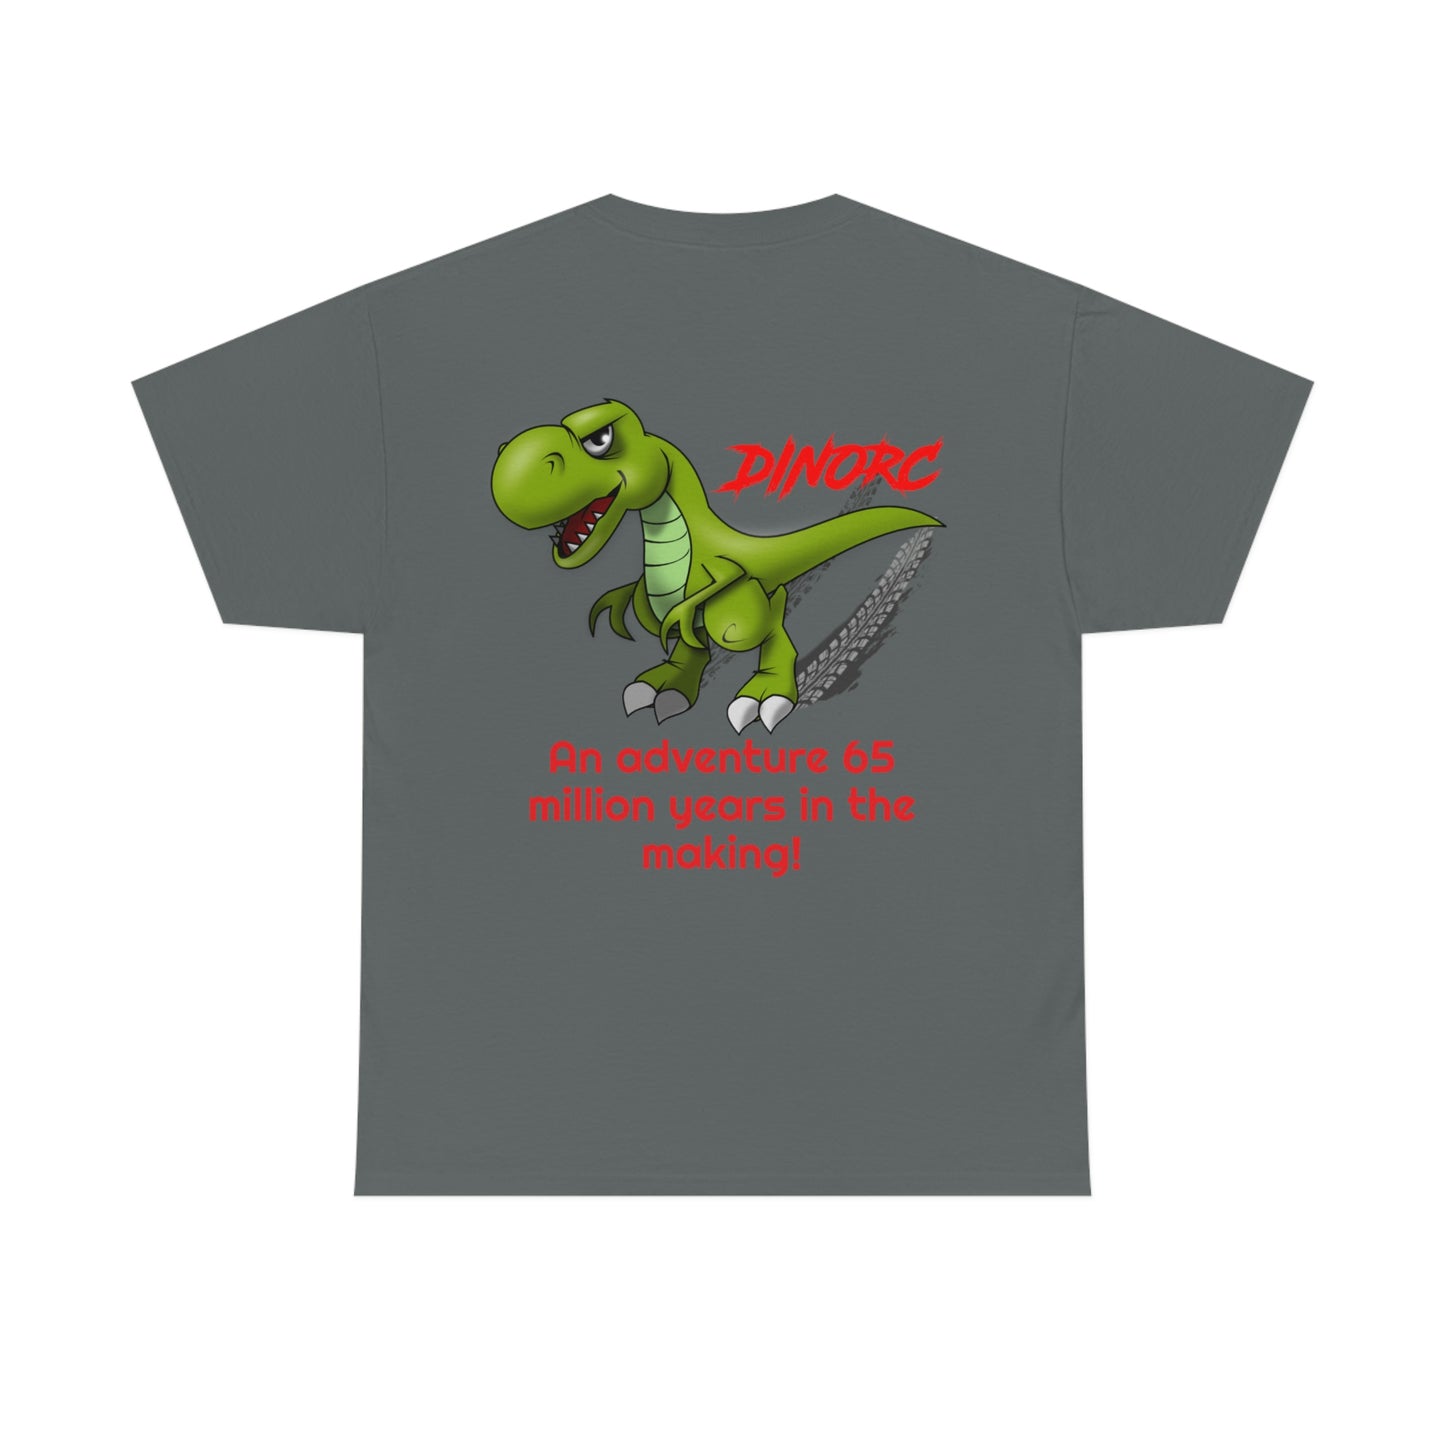 Chris Payne Raptor  DinoRC Team Driver logo Front and Back DinoRc Logo T-Shirt S-5x 5 colors